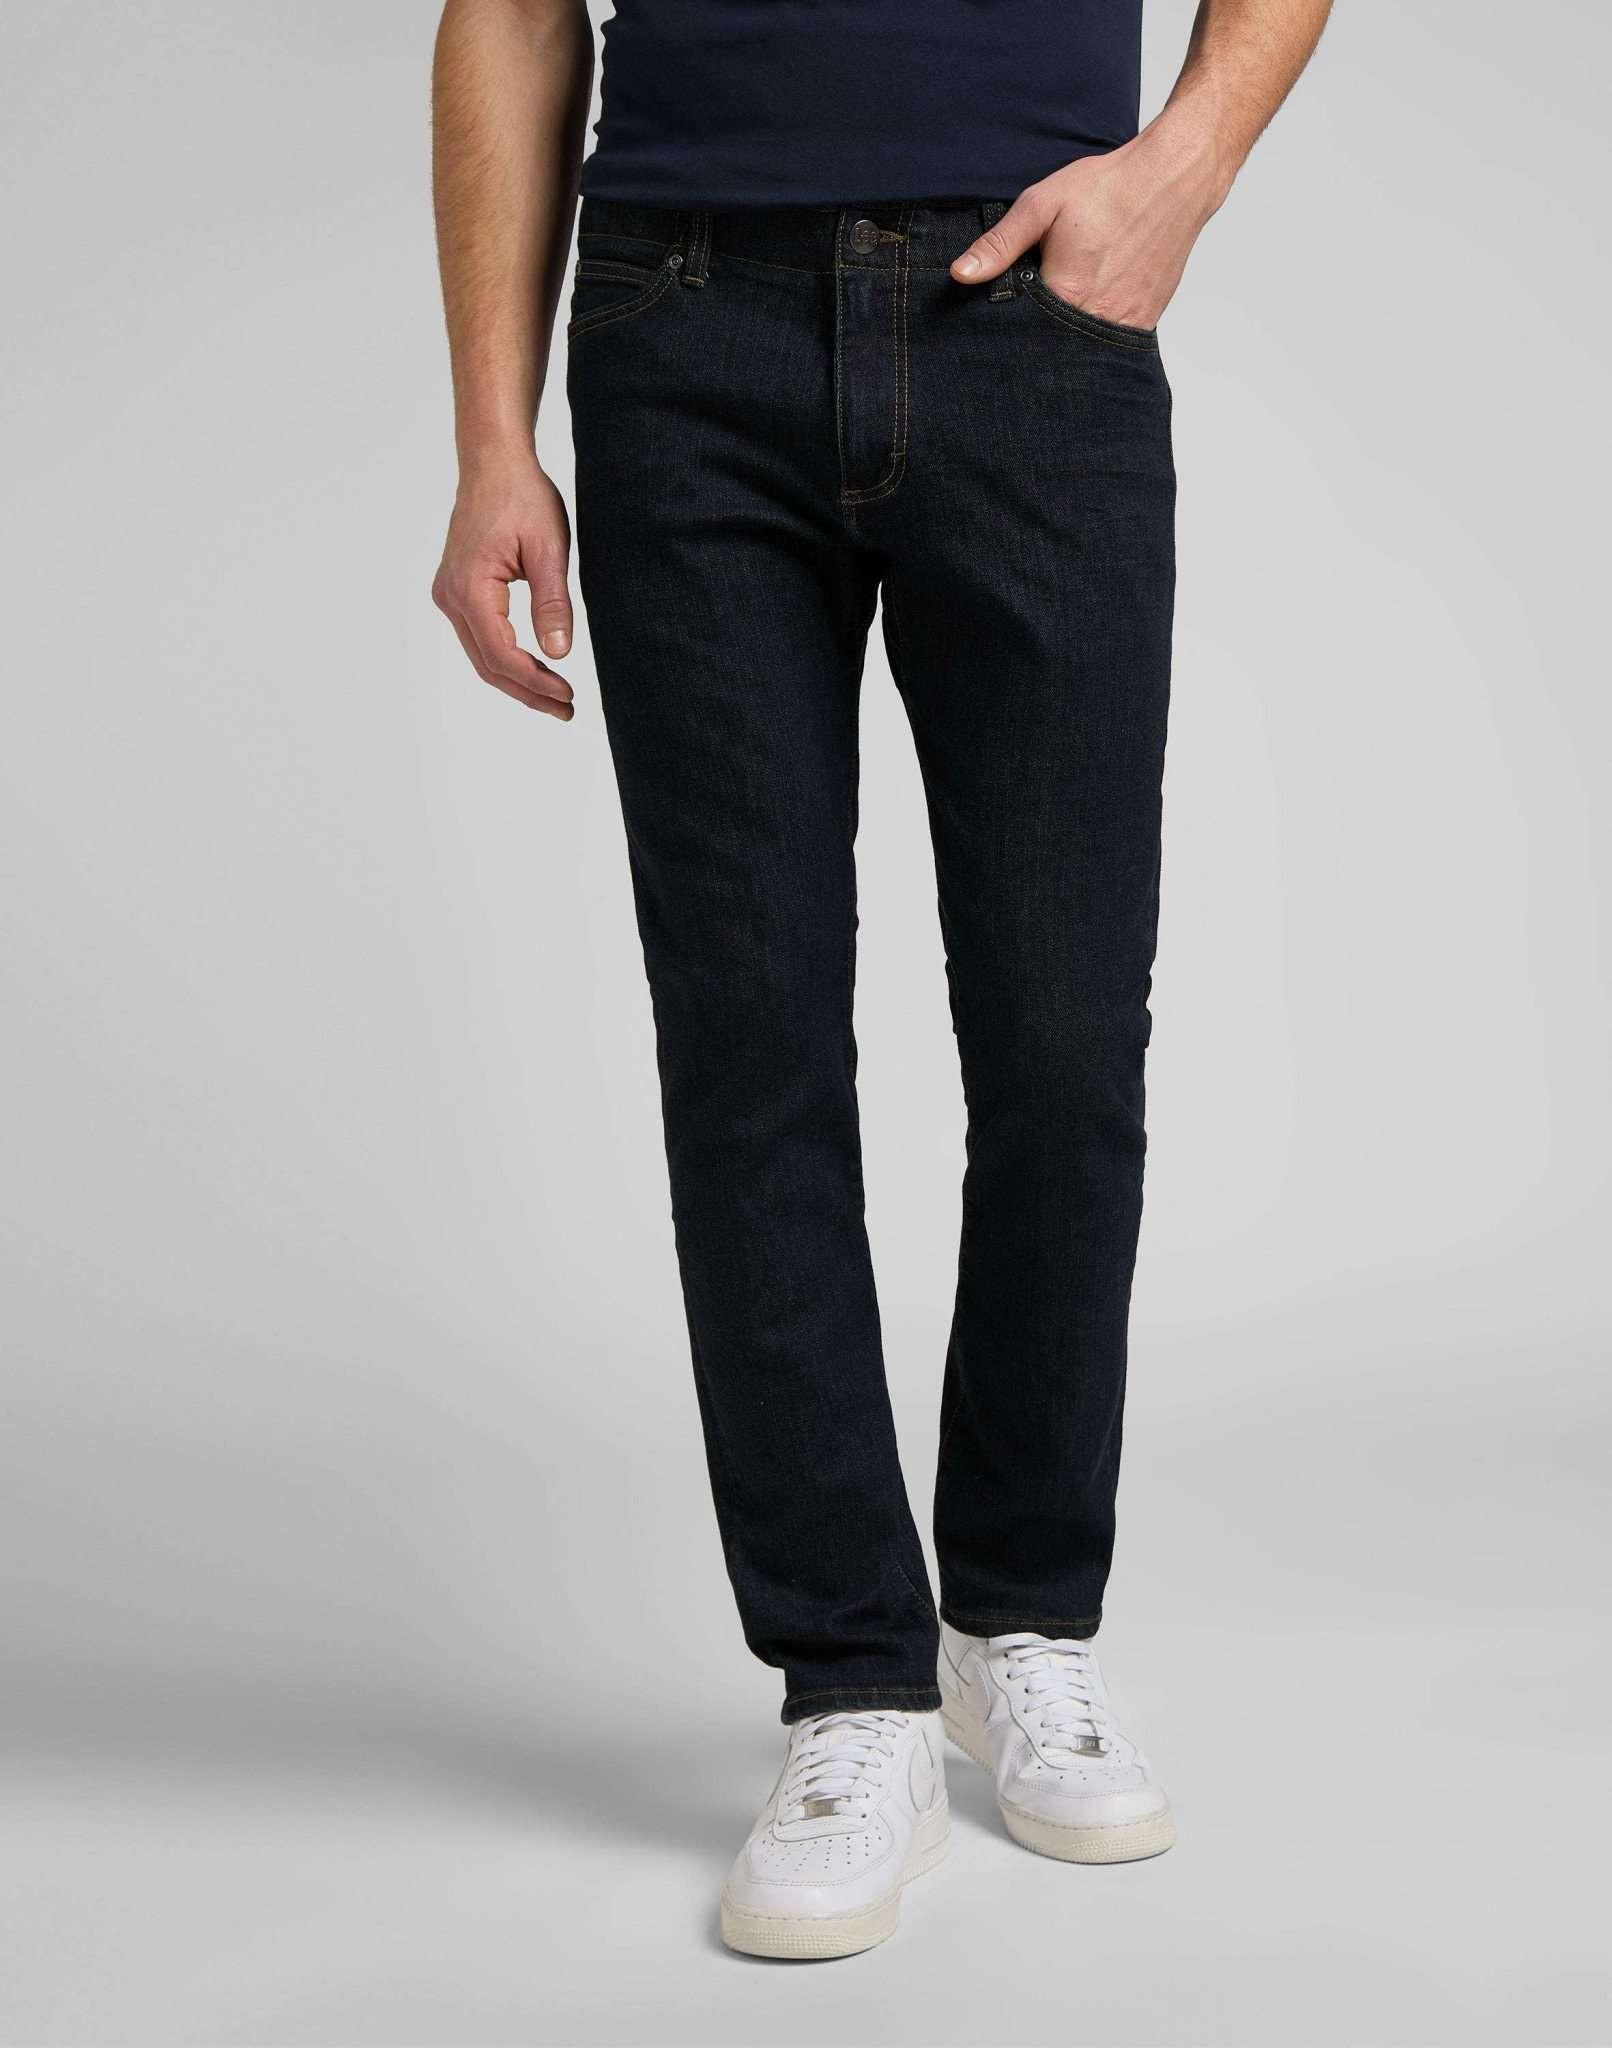 Jeans Skinny Fit Xm Herren Blau Denim L30/W33 von Lee